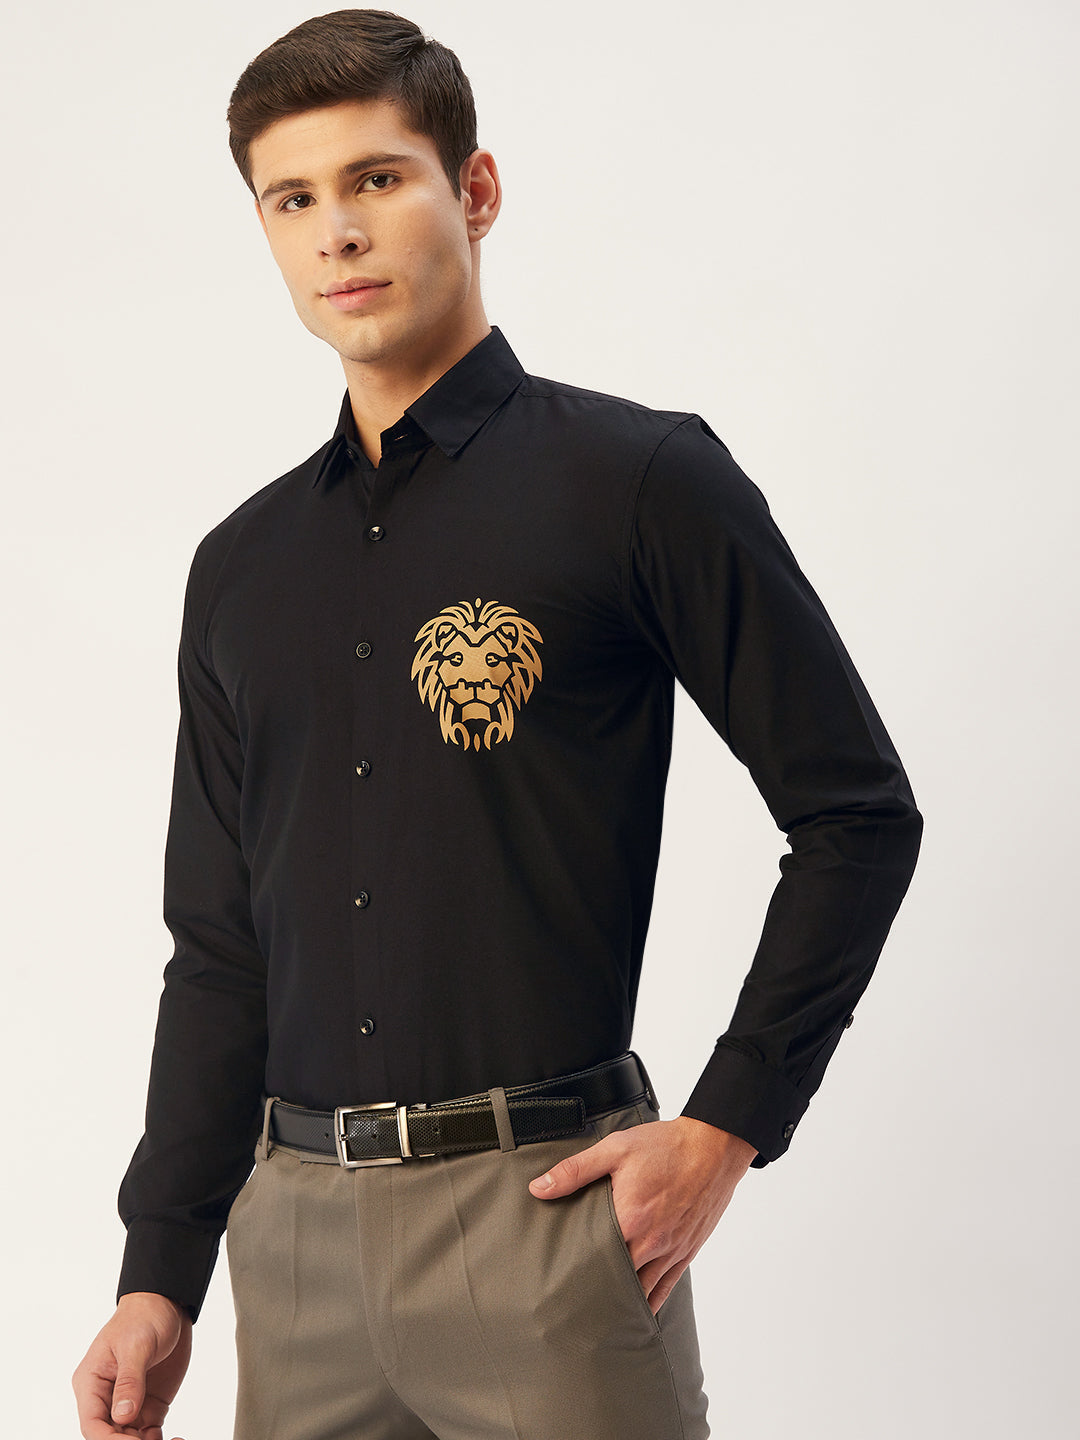 Men's Cotton Printed Formal Shirts ( SF 806Black ) - Jainish